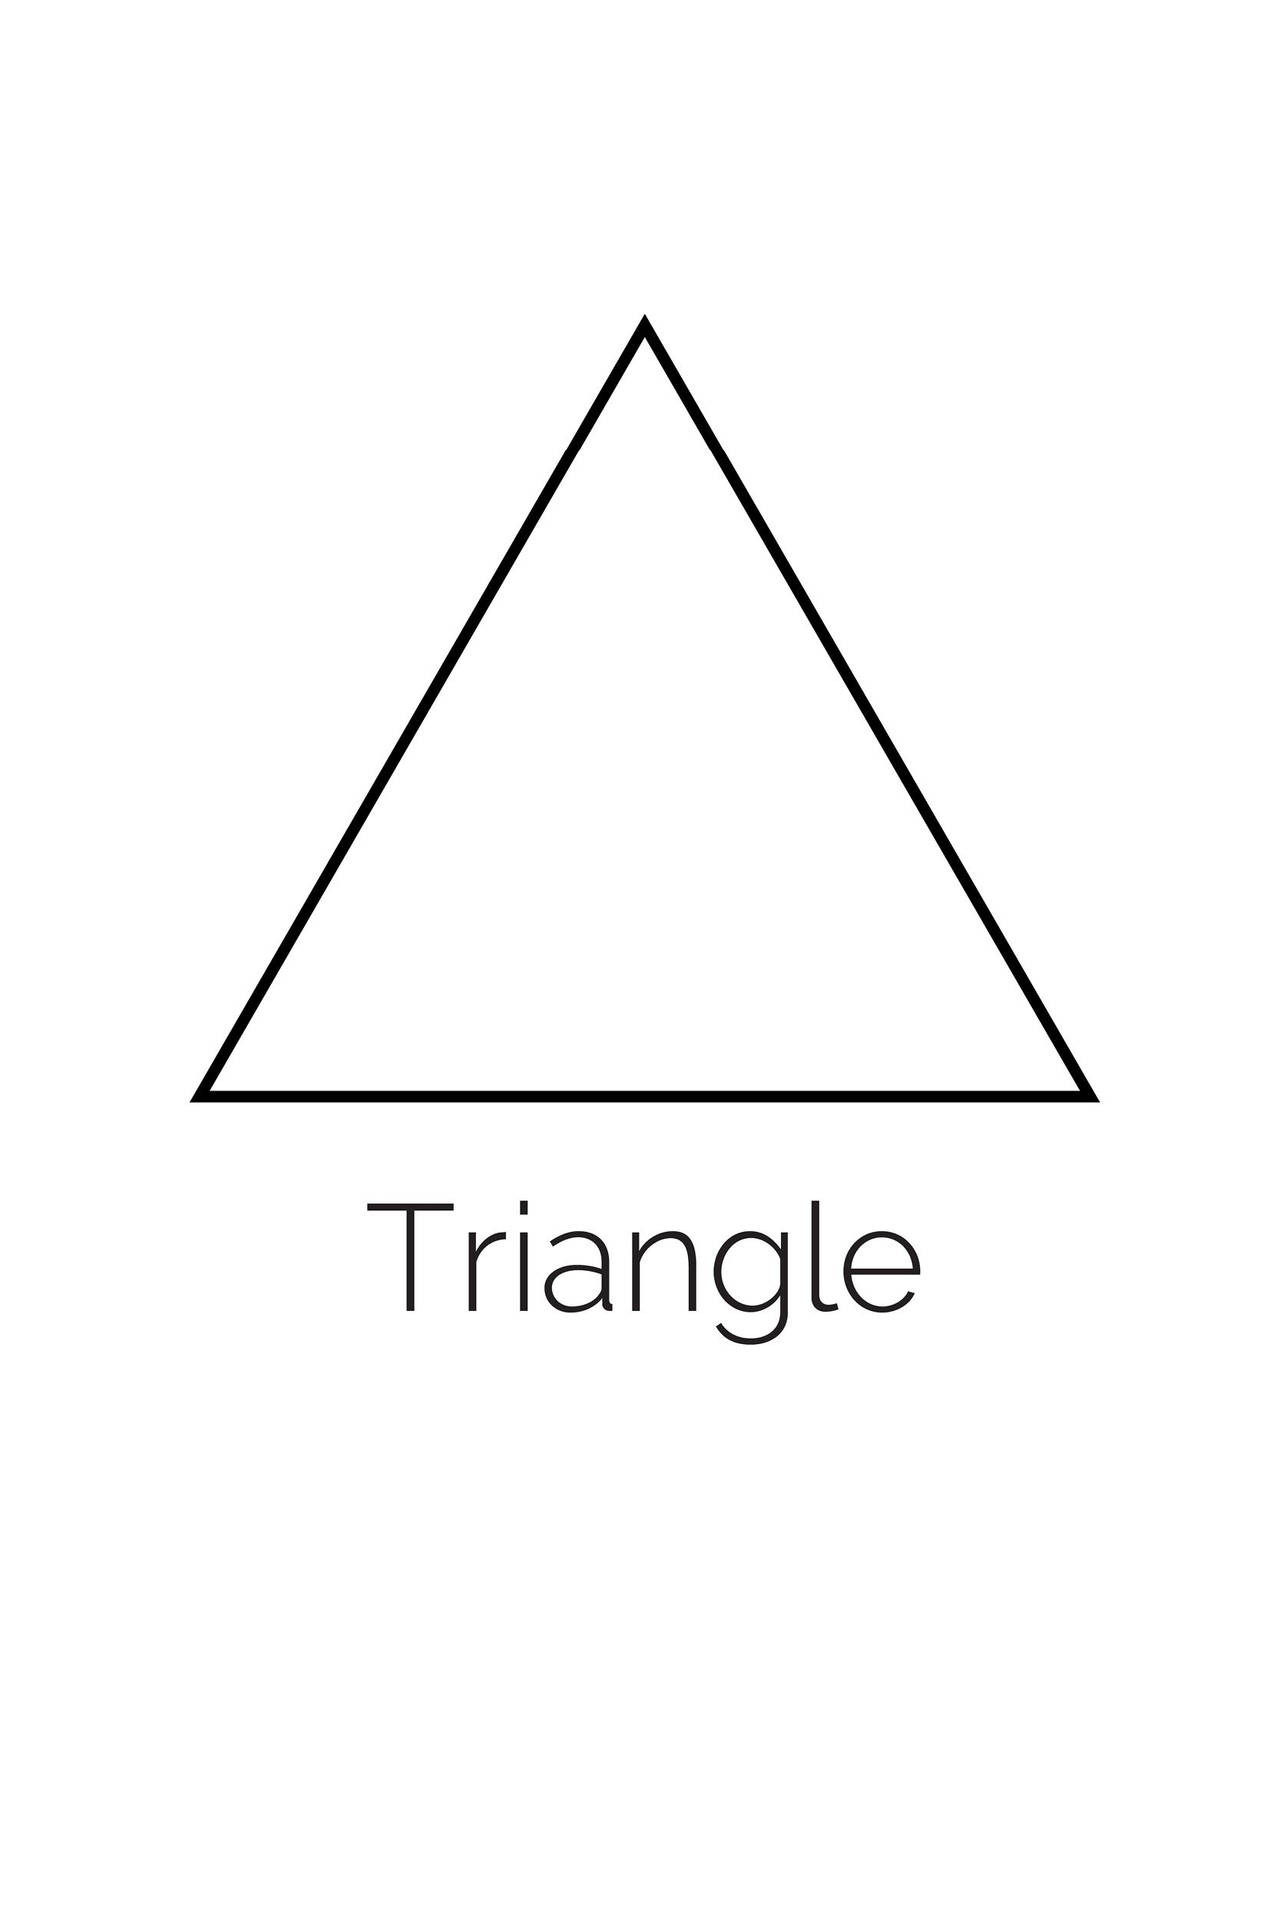 Descriptive Triangle Outline Background